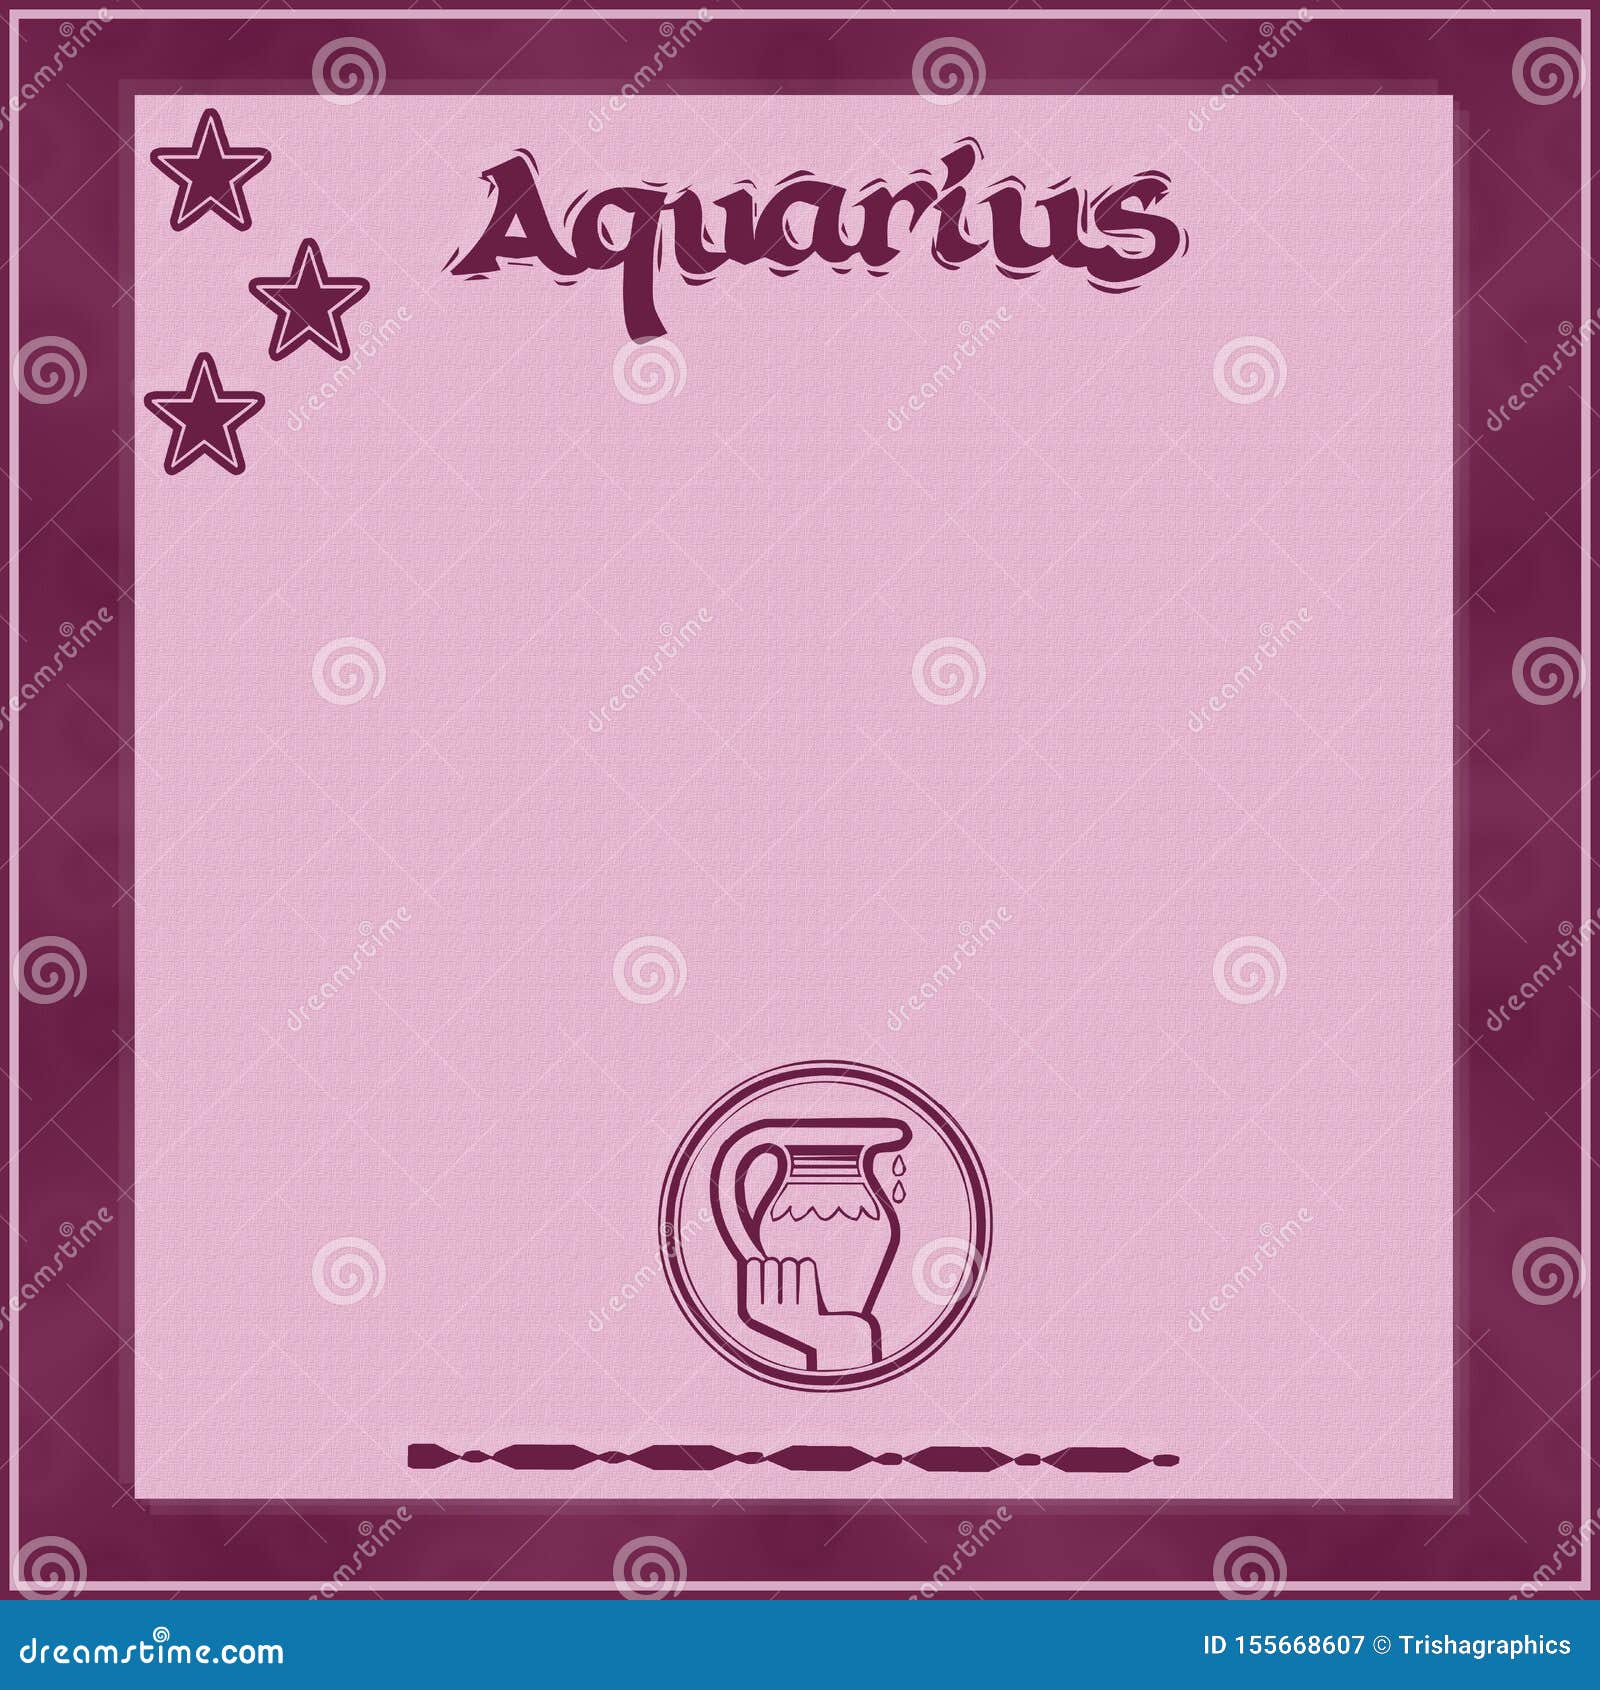 elegant frame with zodiac sign-aquarius